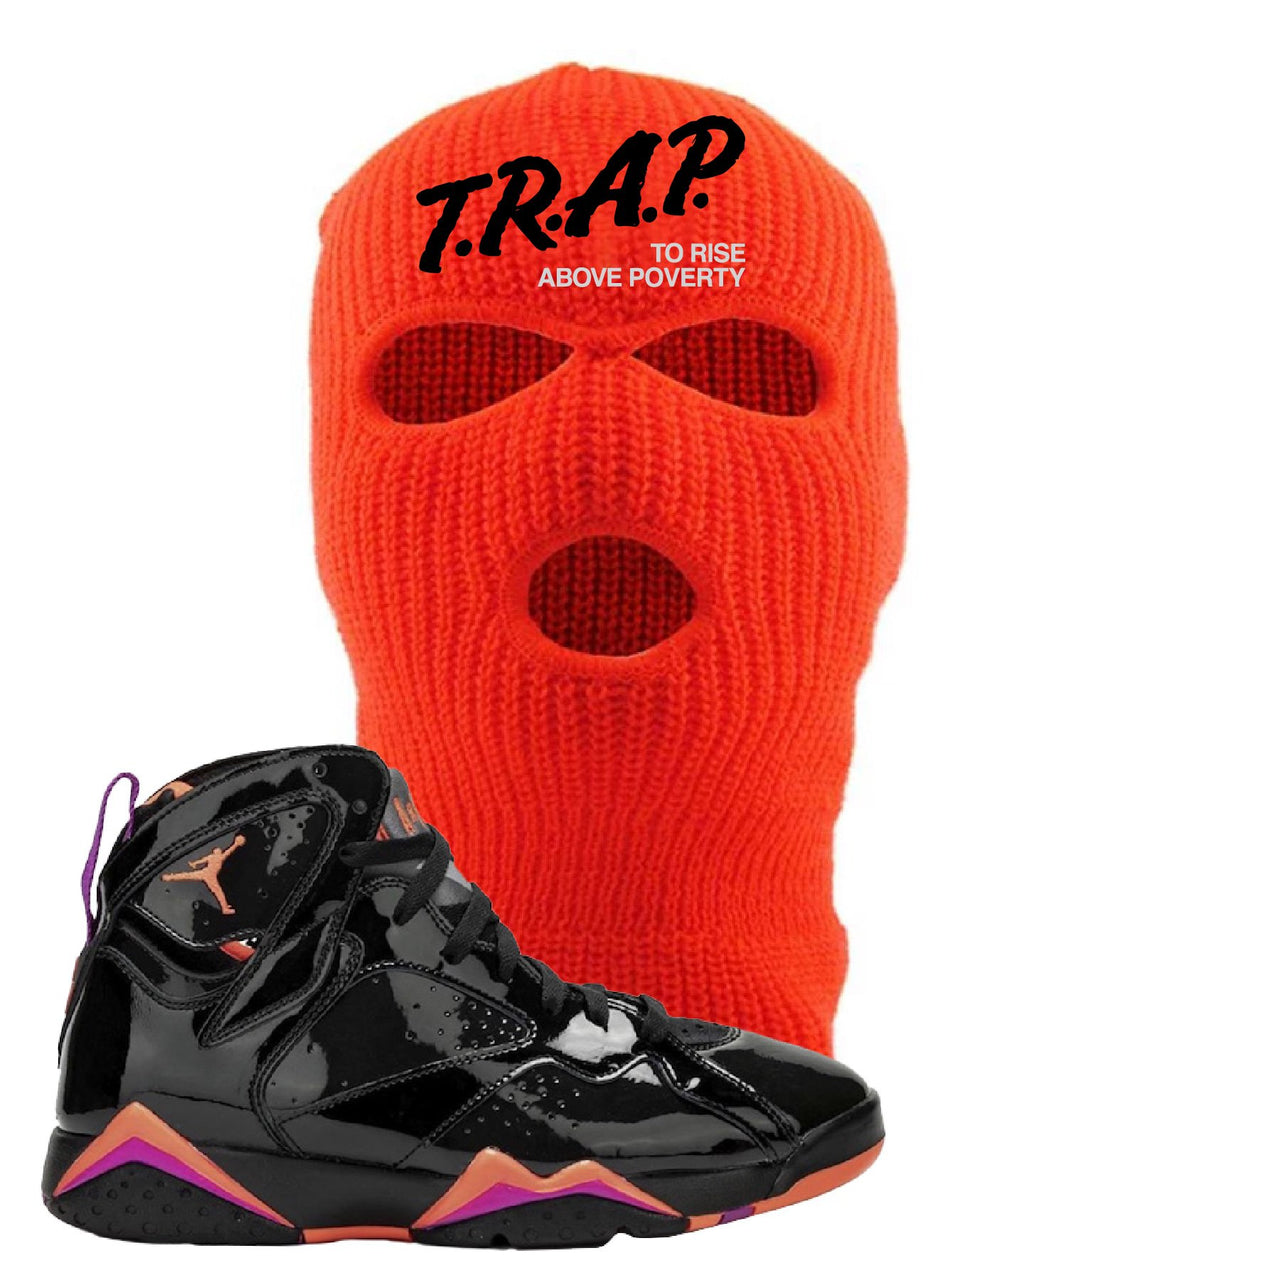 Jordan 7 WMNS Black Patent Leather Trap To Rise Above Poverty Safety Orange Sneaker Hook Up Ski Mask